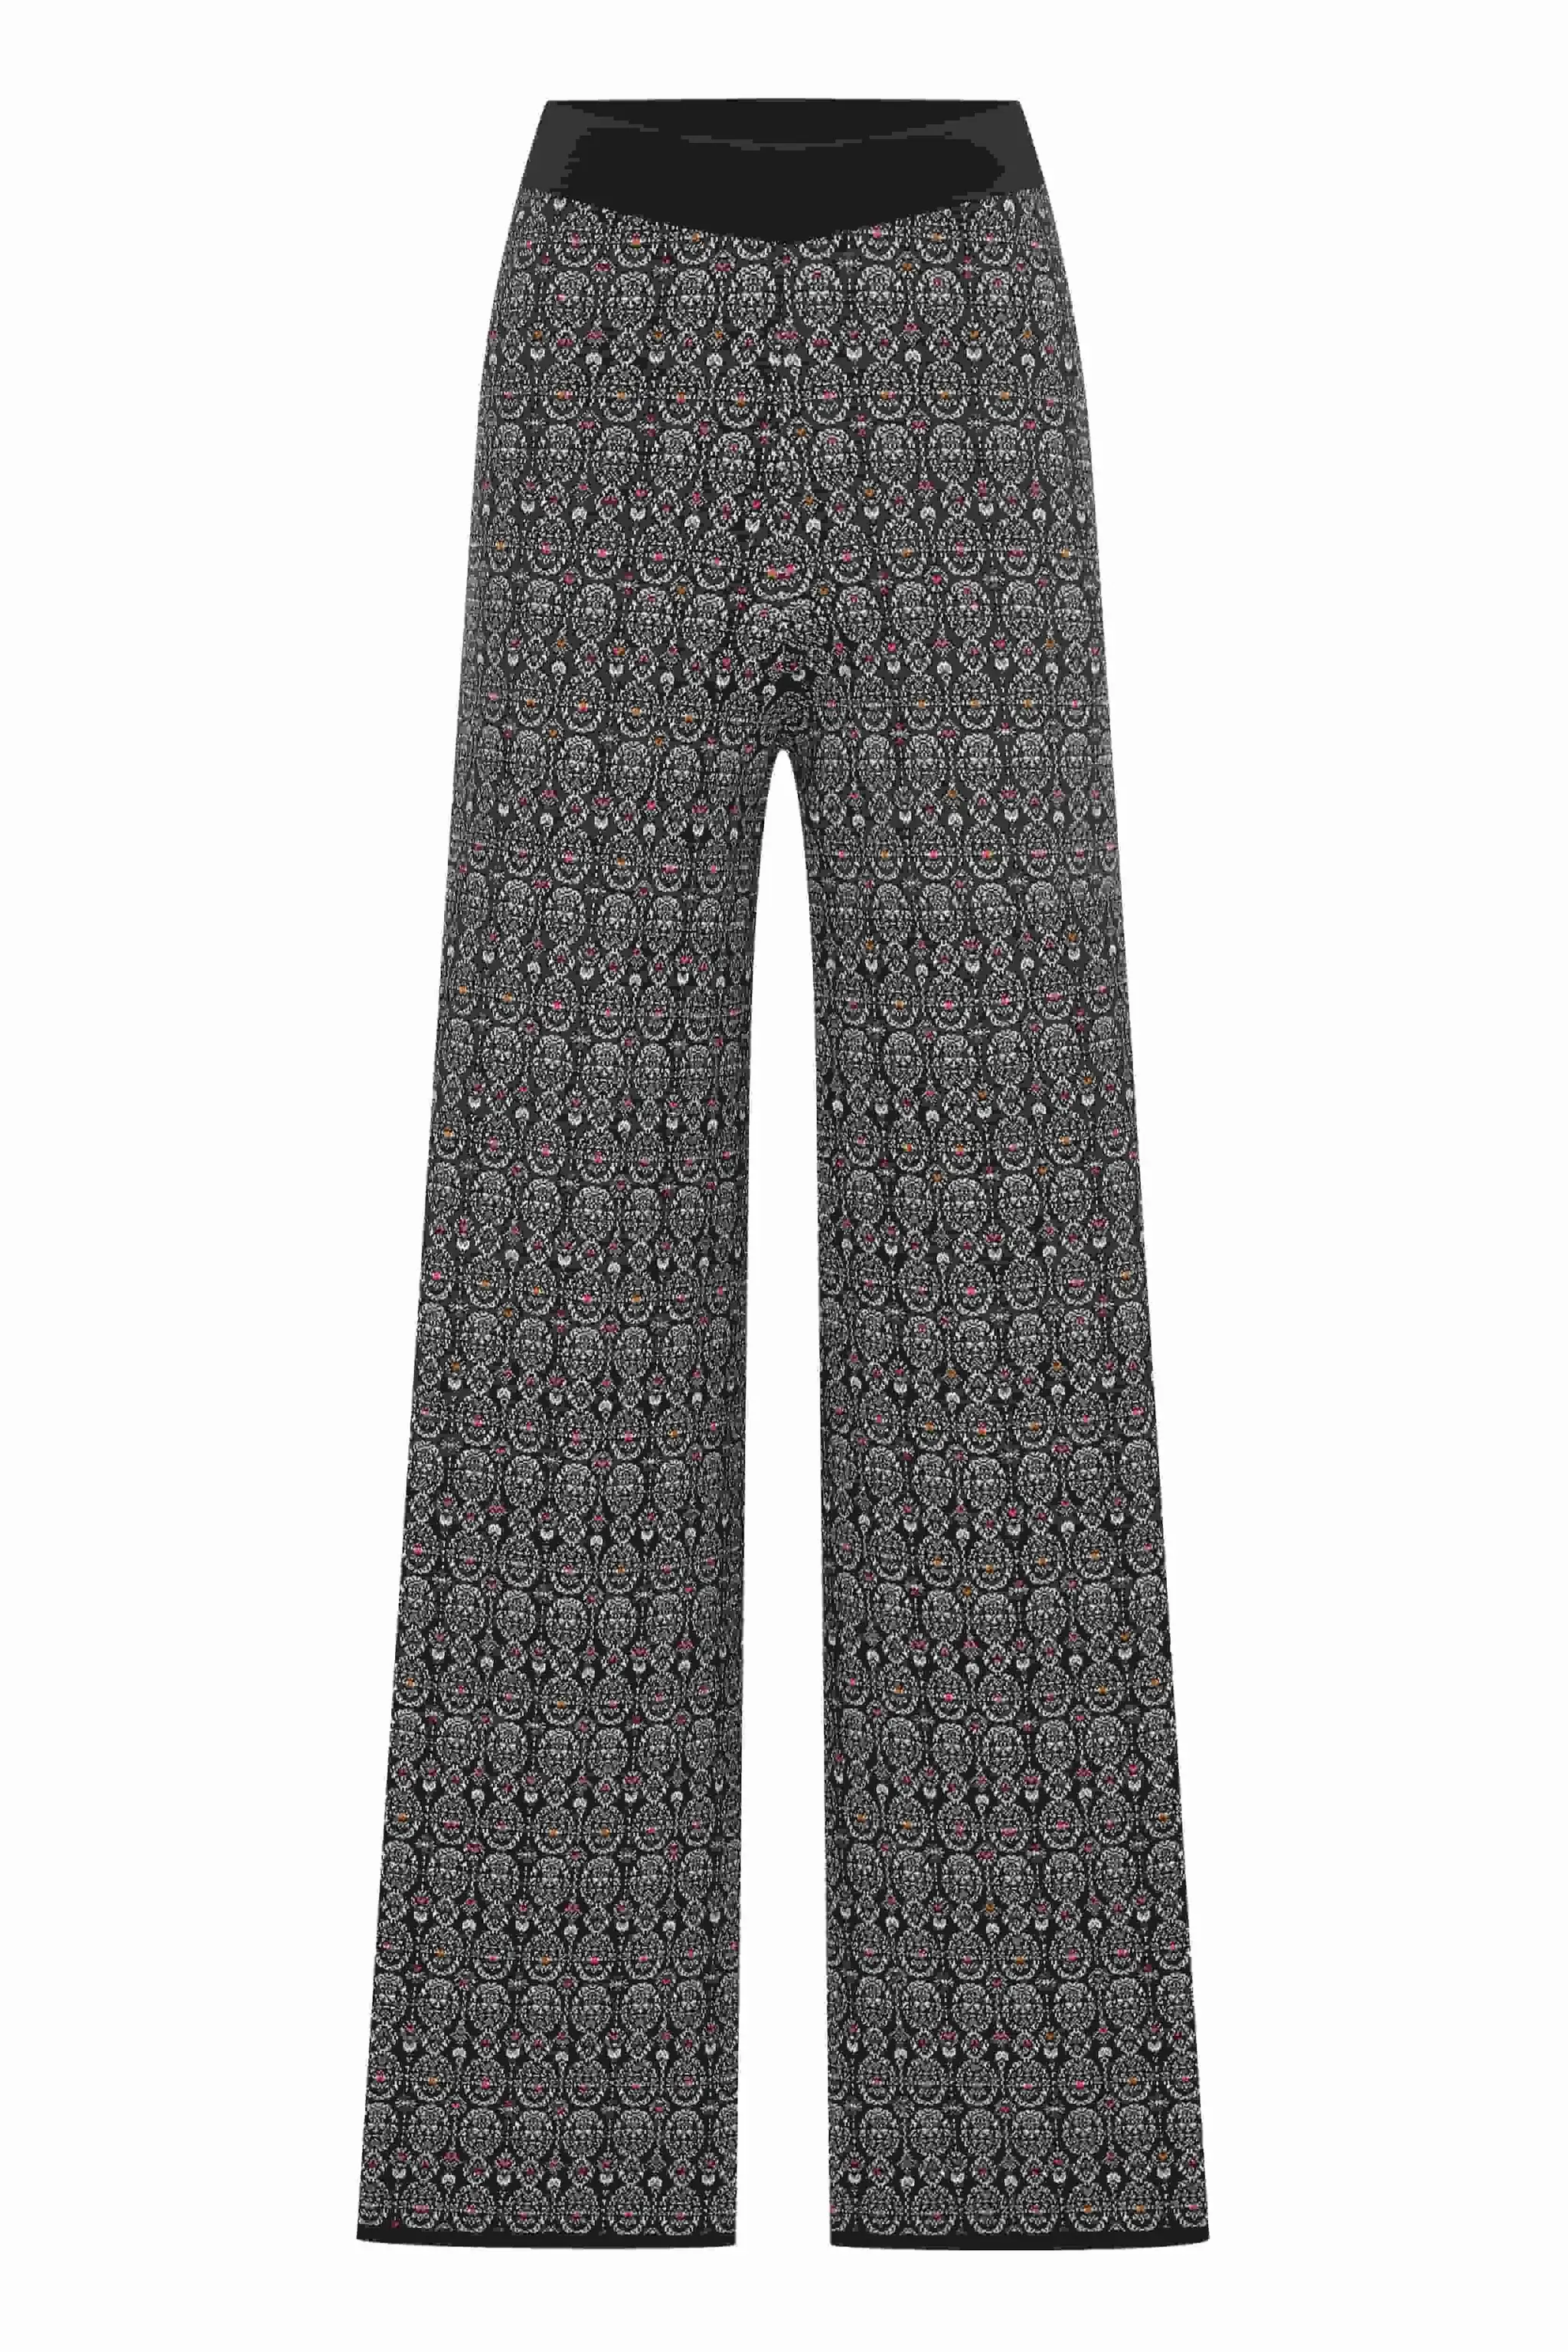 Roman Ethnic Patterned Elastic Knitwear Trousers - 1 / Original. 1